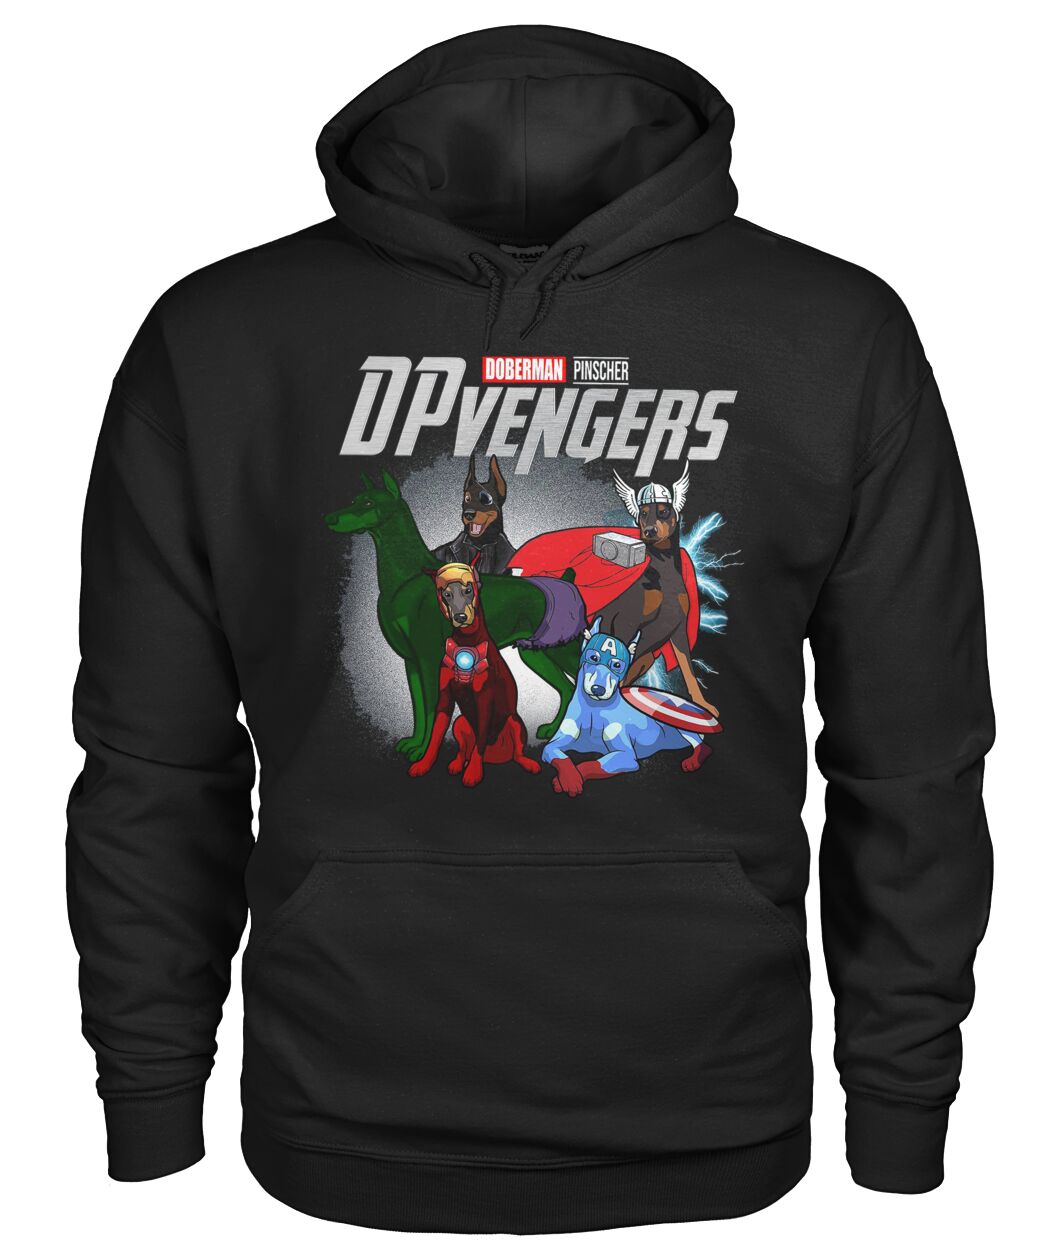 Doberman Dpvengers 3D Hoodie, Shirt 9